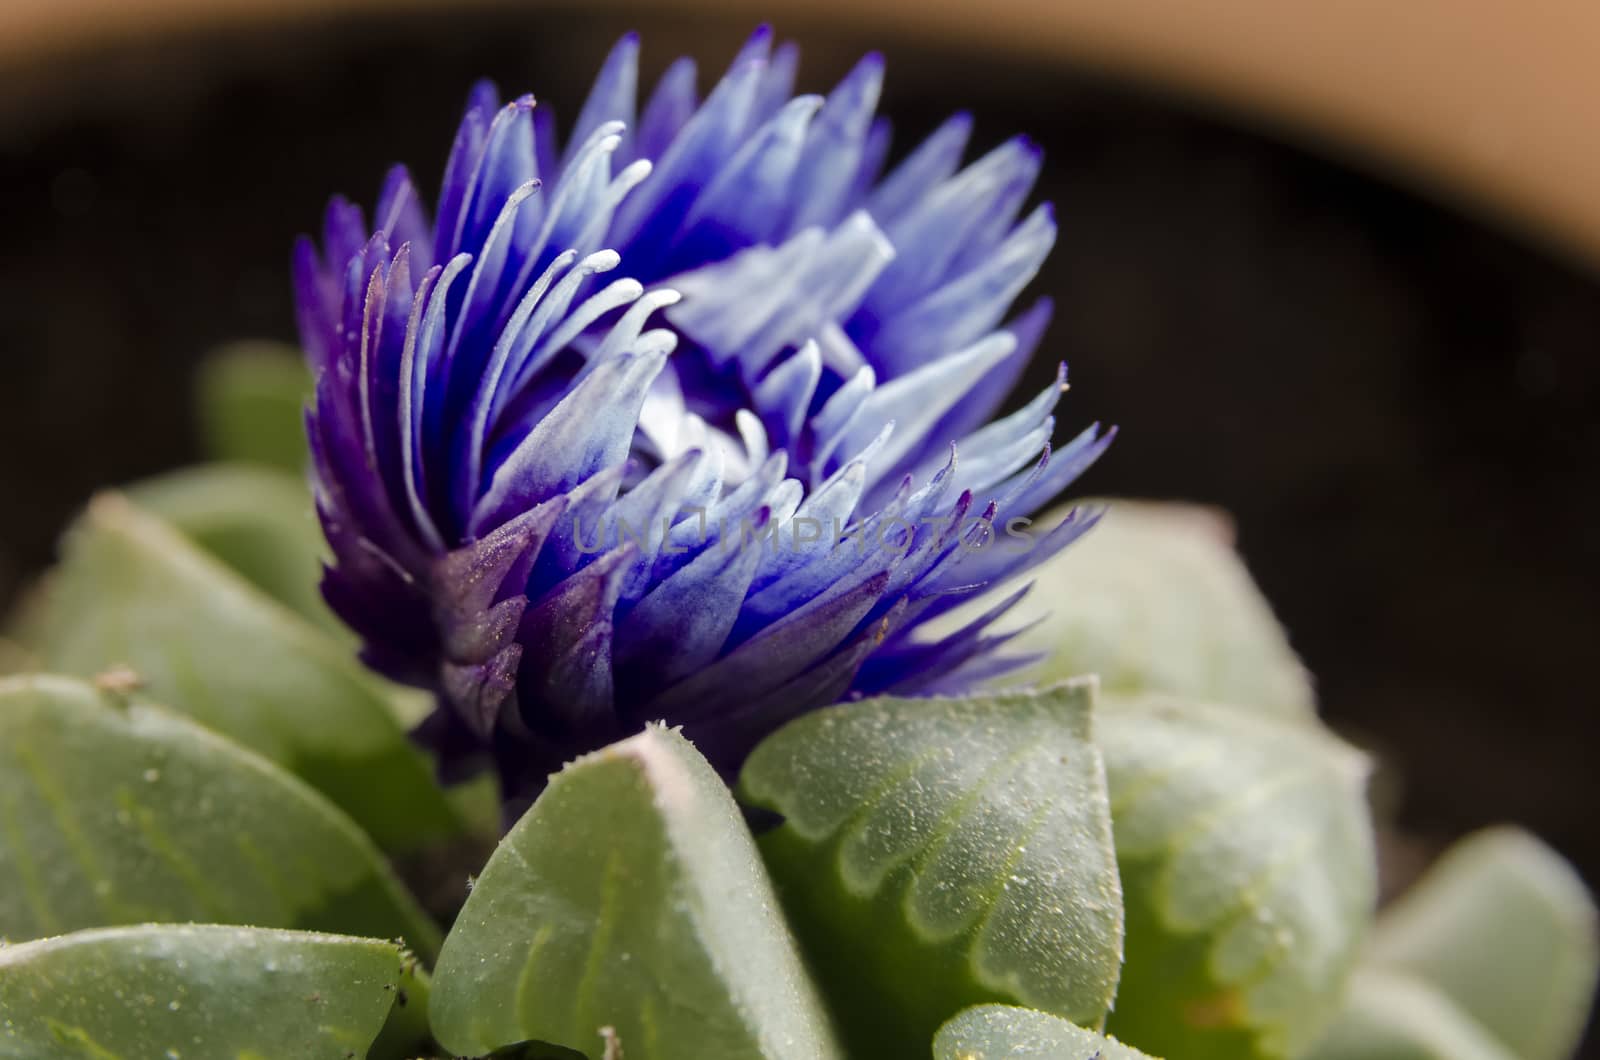 Purple cactus flower by bpardofotografia